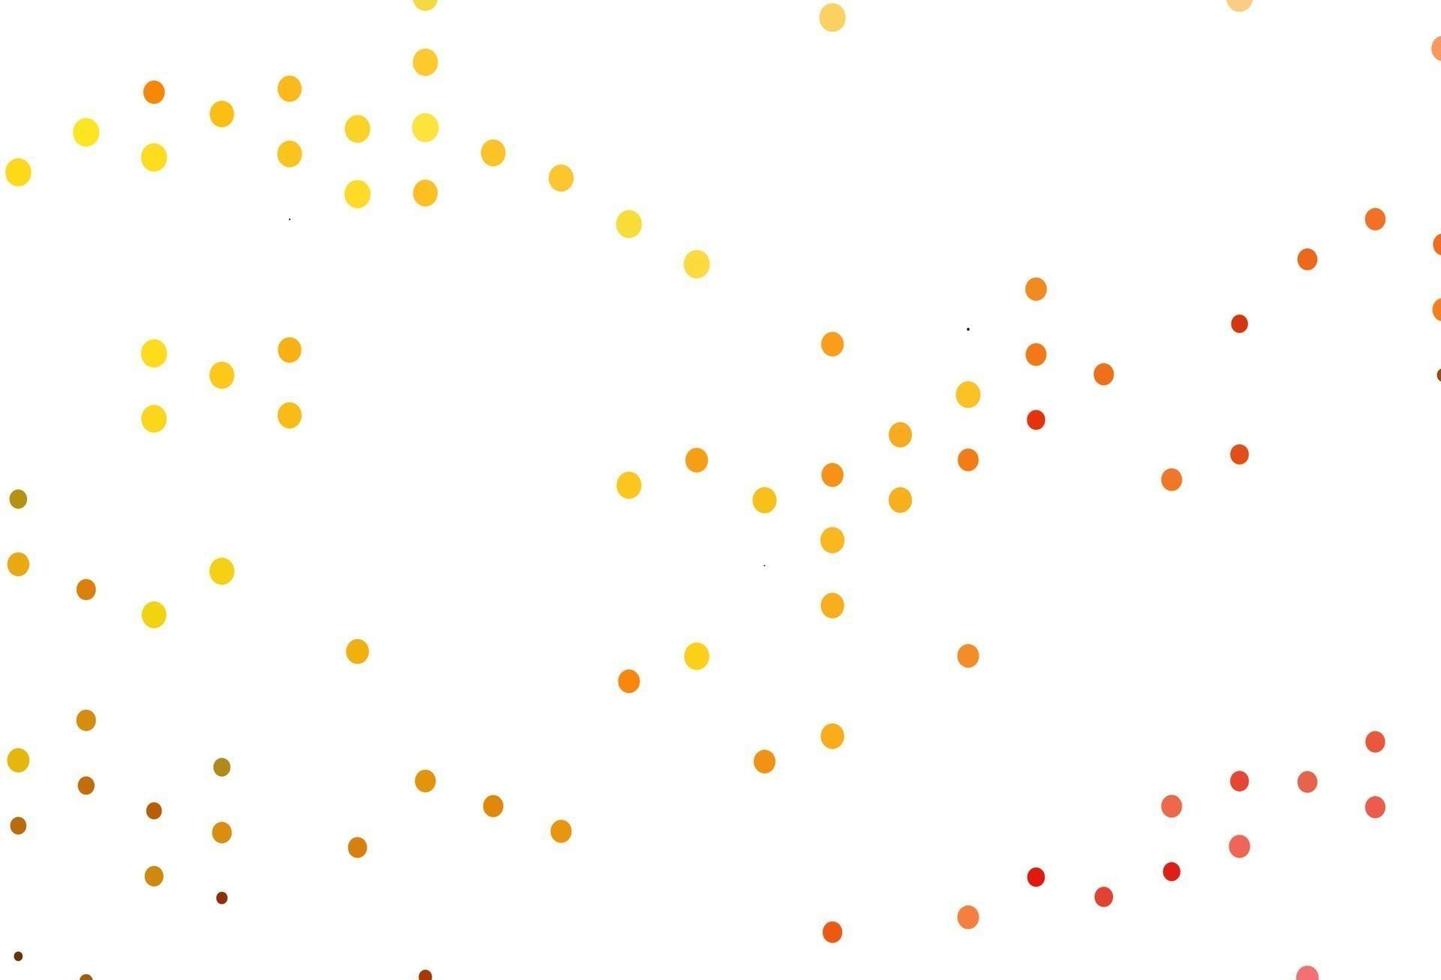 layout de vetor amarelo e laranja claro com formas de círculo.